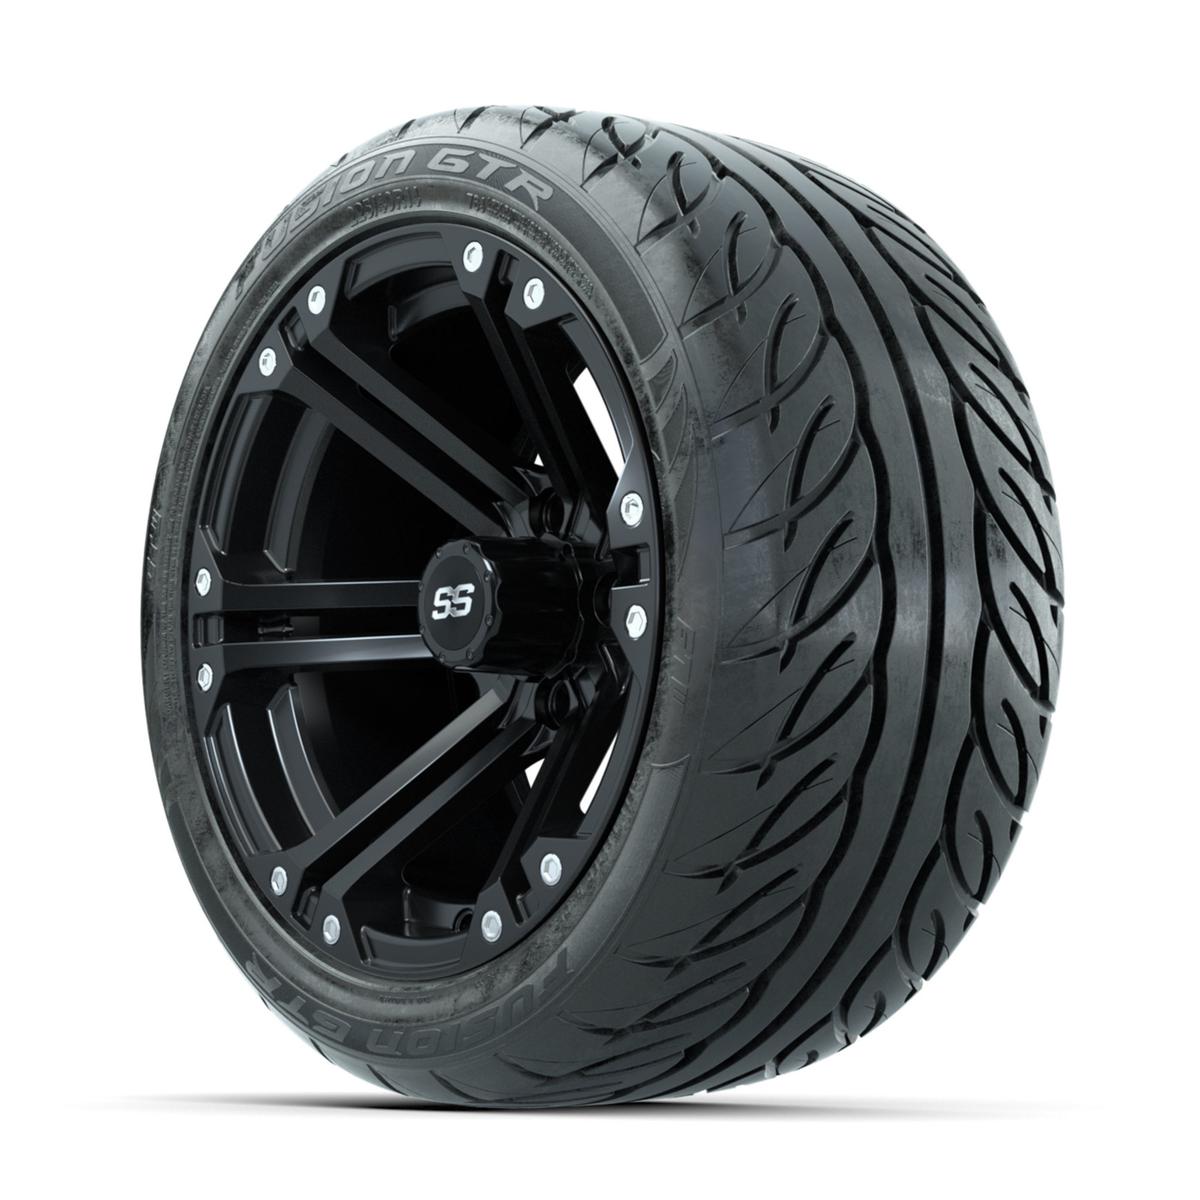 GTW Specter Matte Black 14 in Wheels with 225/40-R14 Fusion GTR Street Tires – Full Set